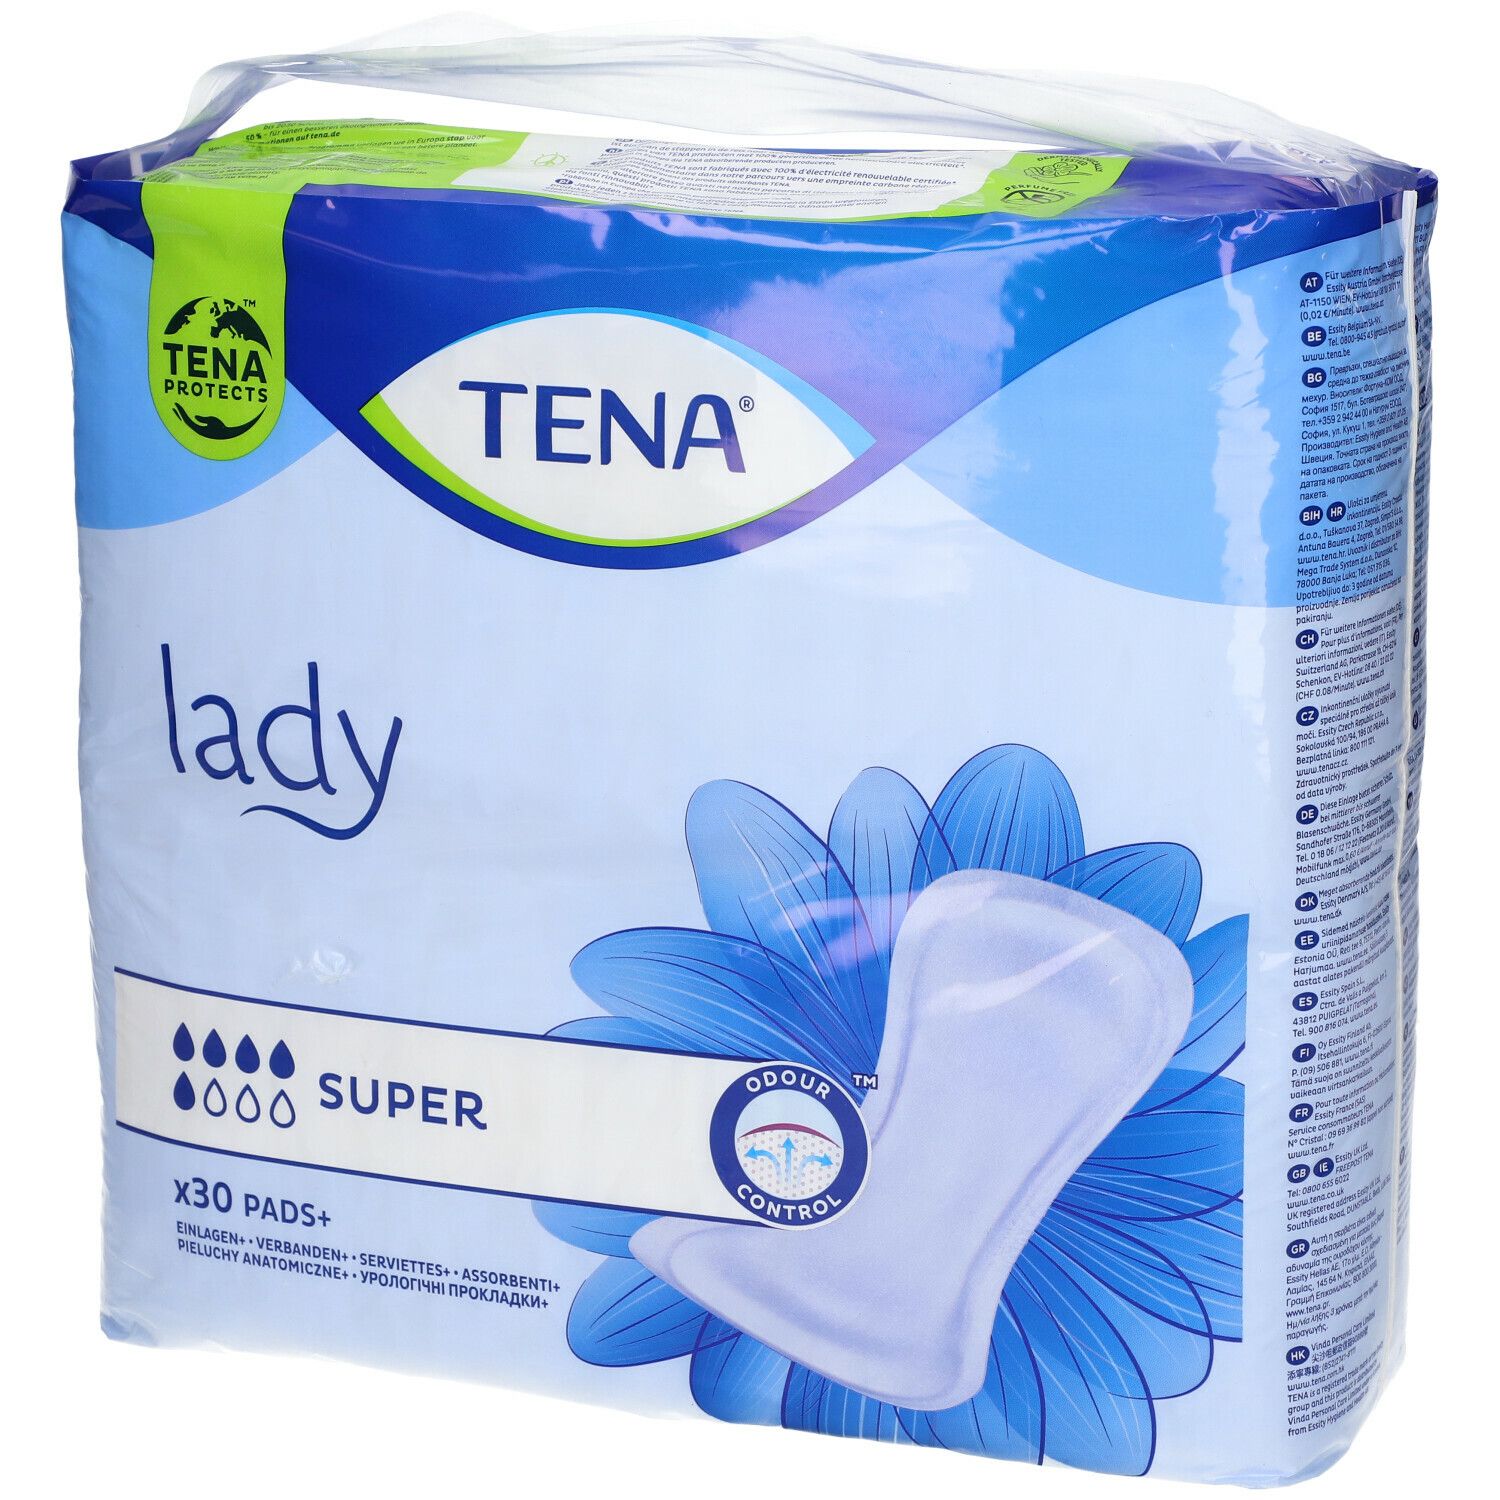 TENA® Lady Odour Control Super